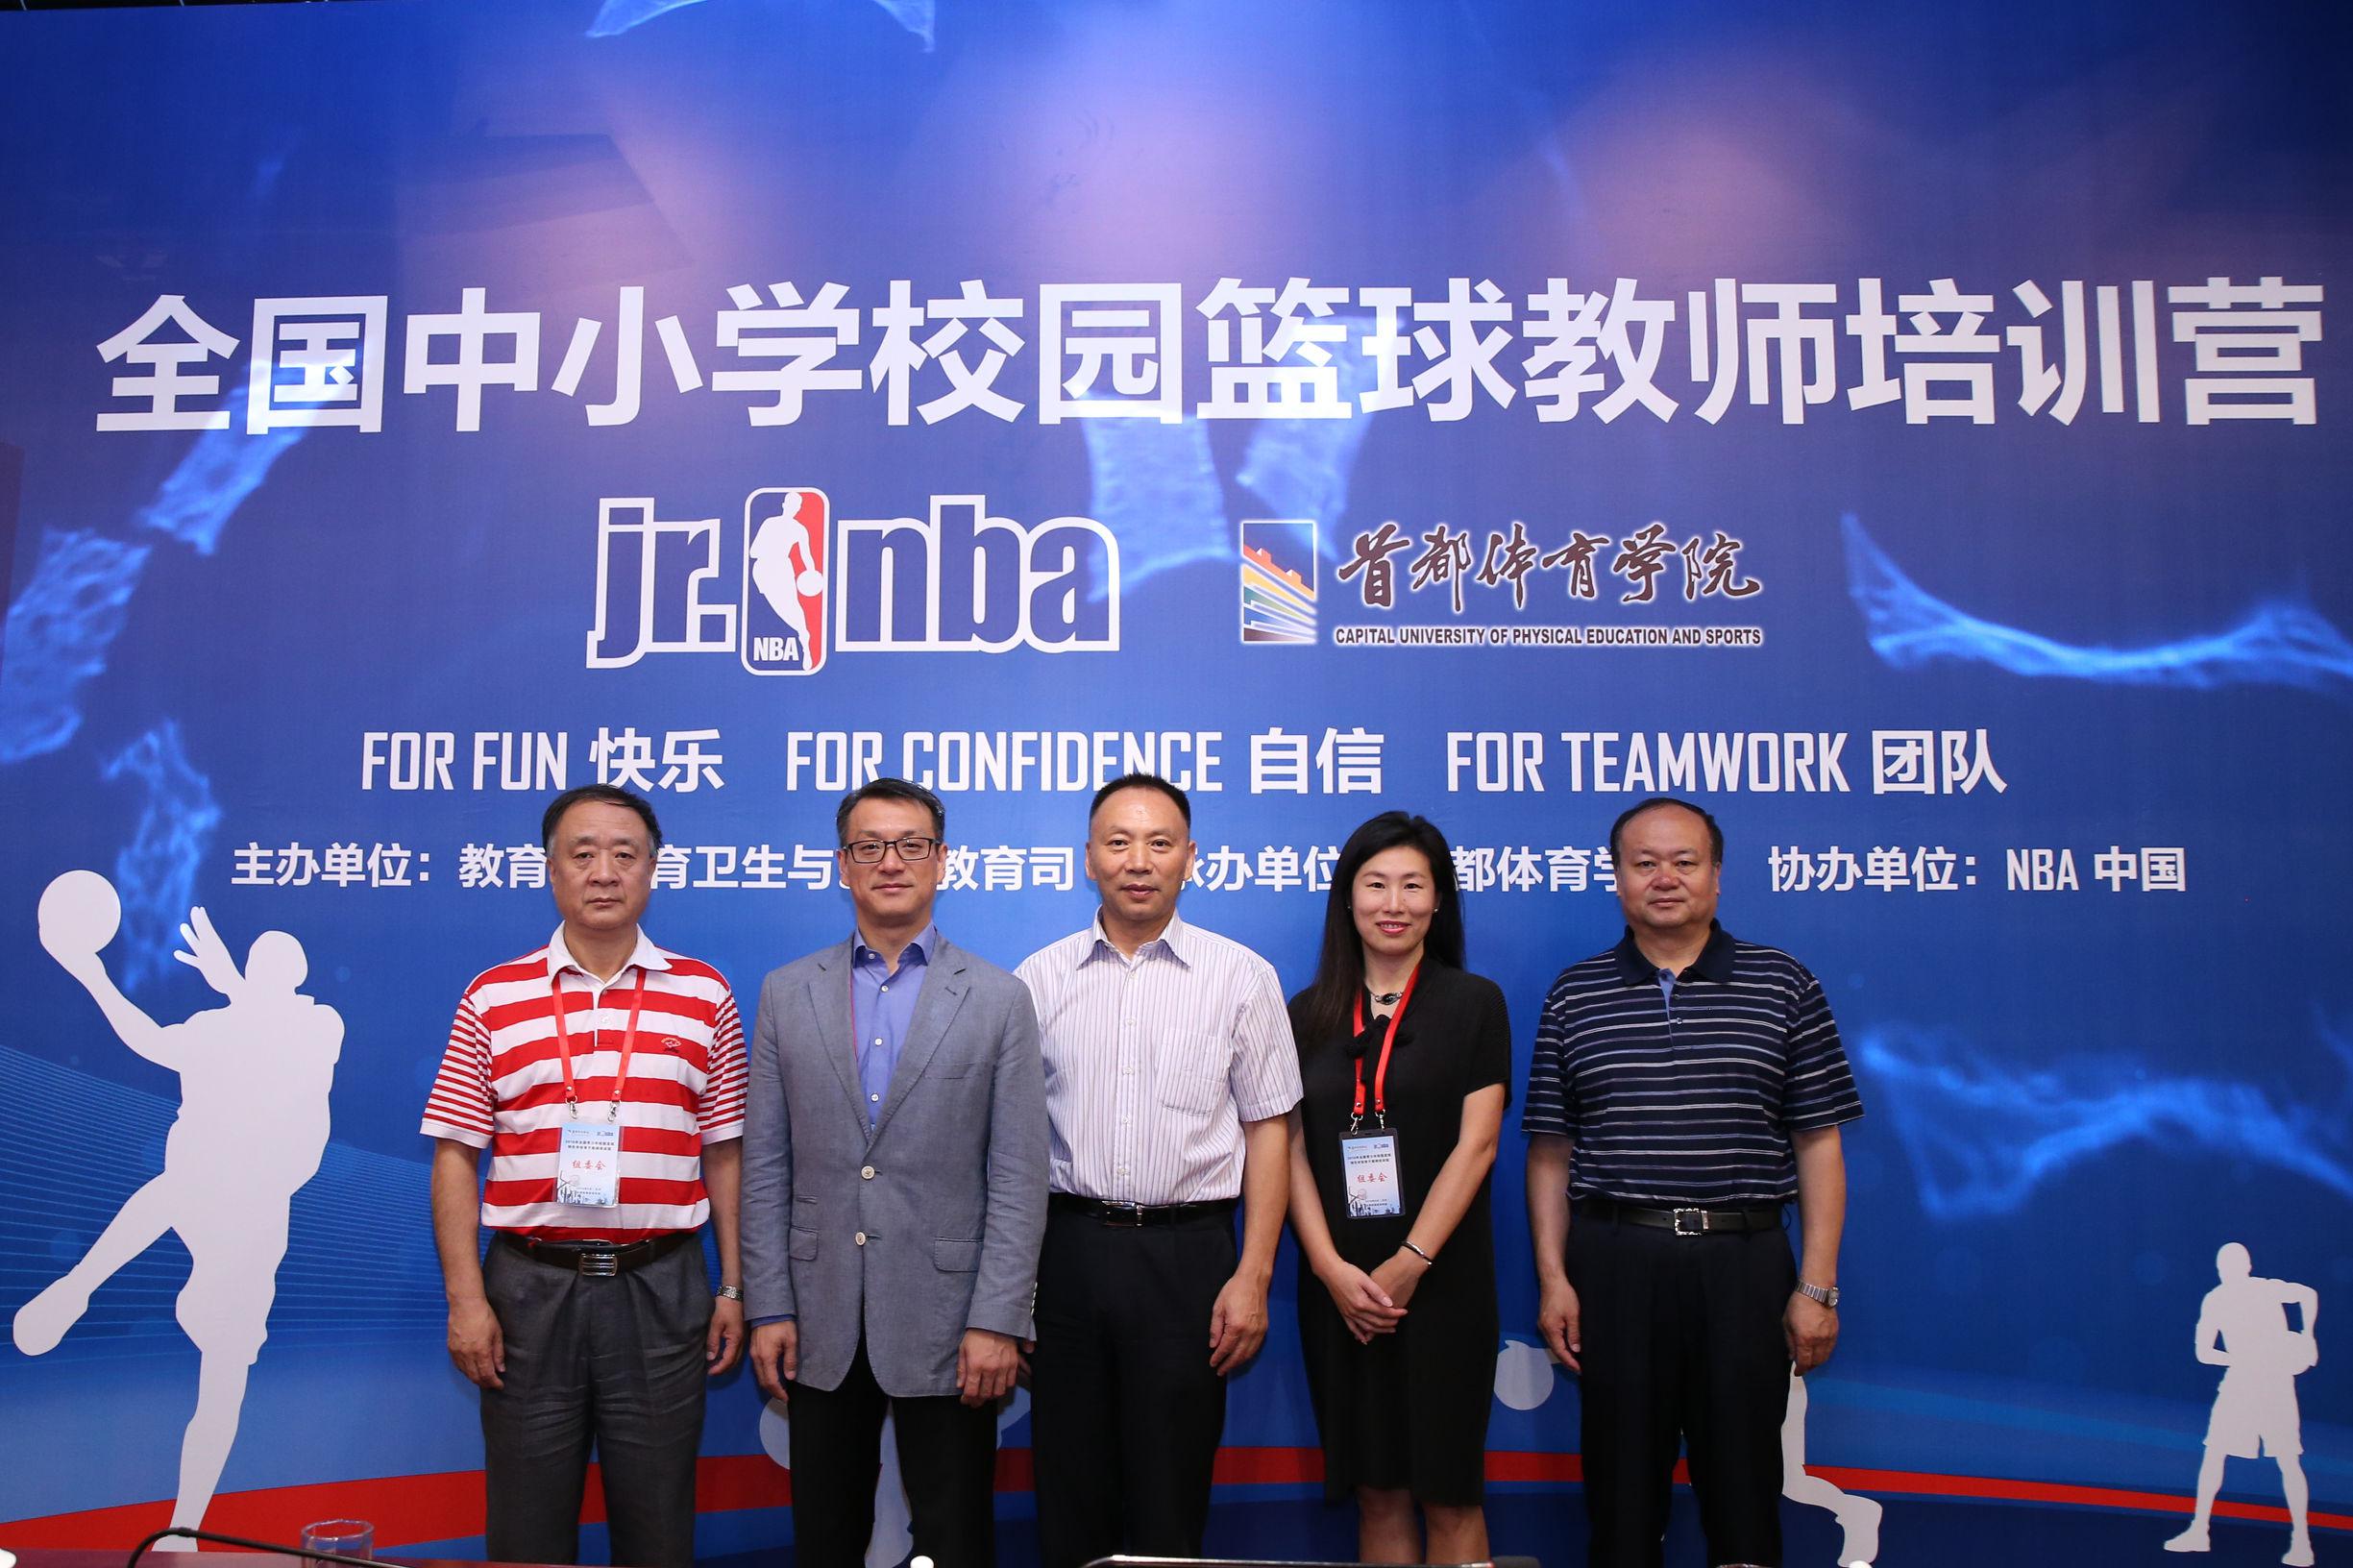 jr. nba 体育老师培训 NBA中国正式开启全国中小学体育老师培训项目